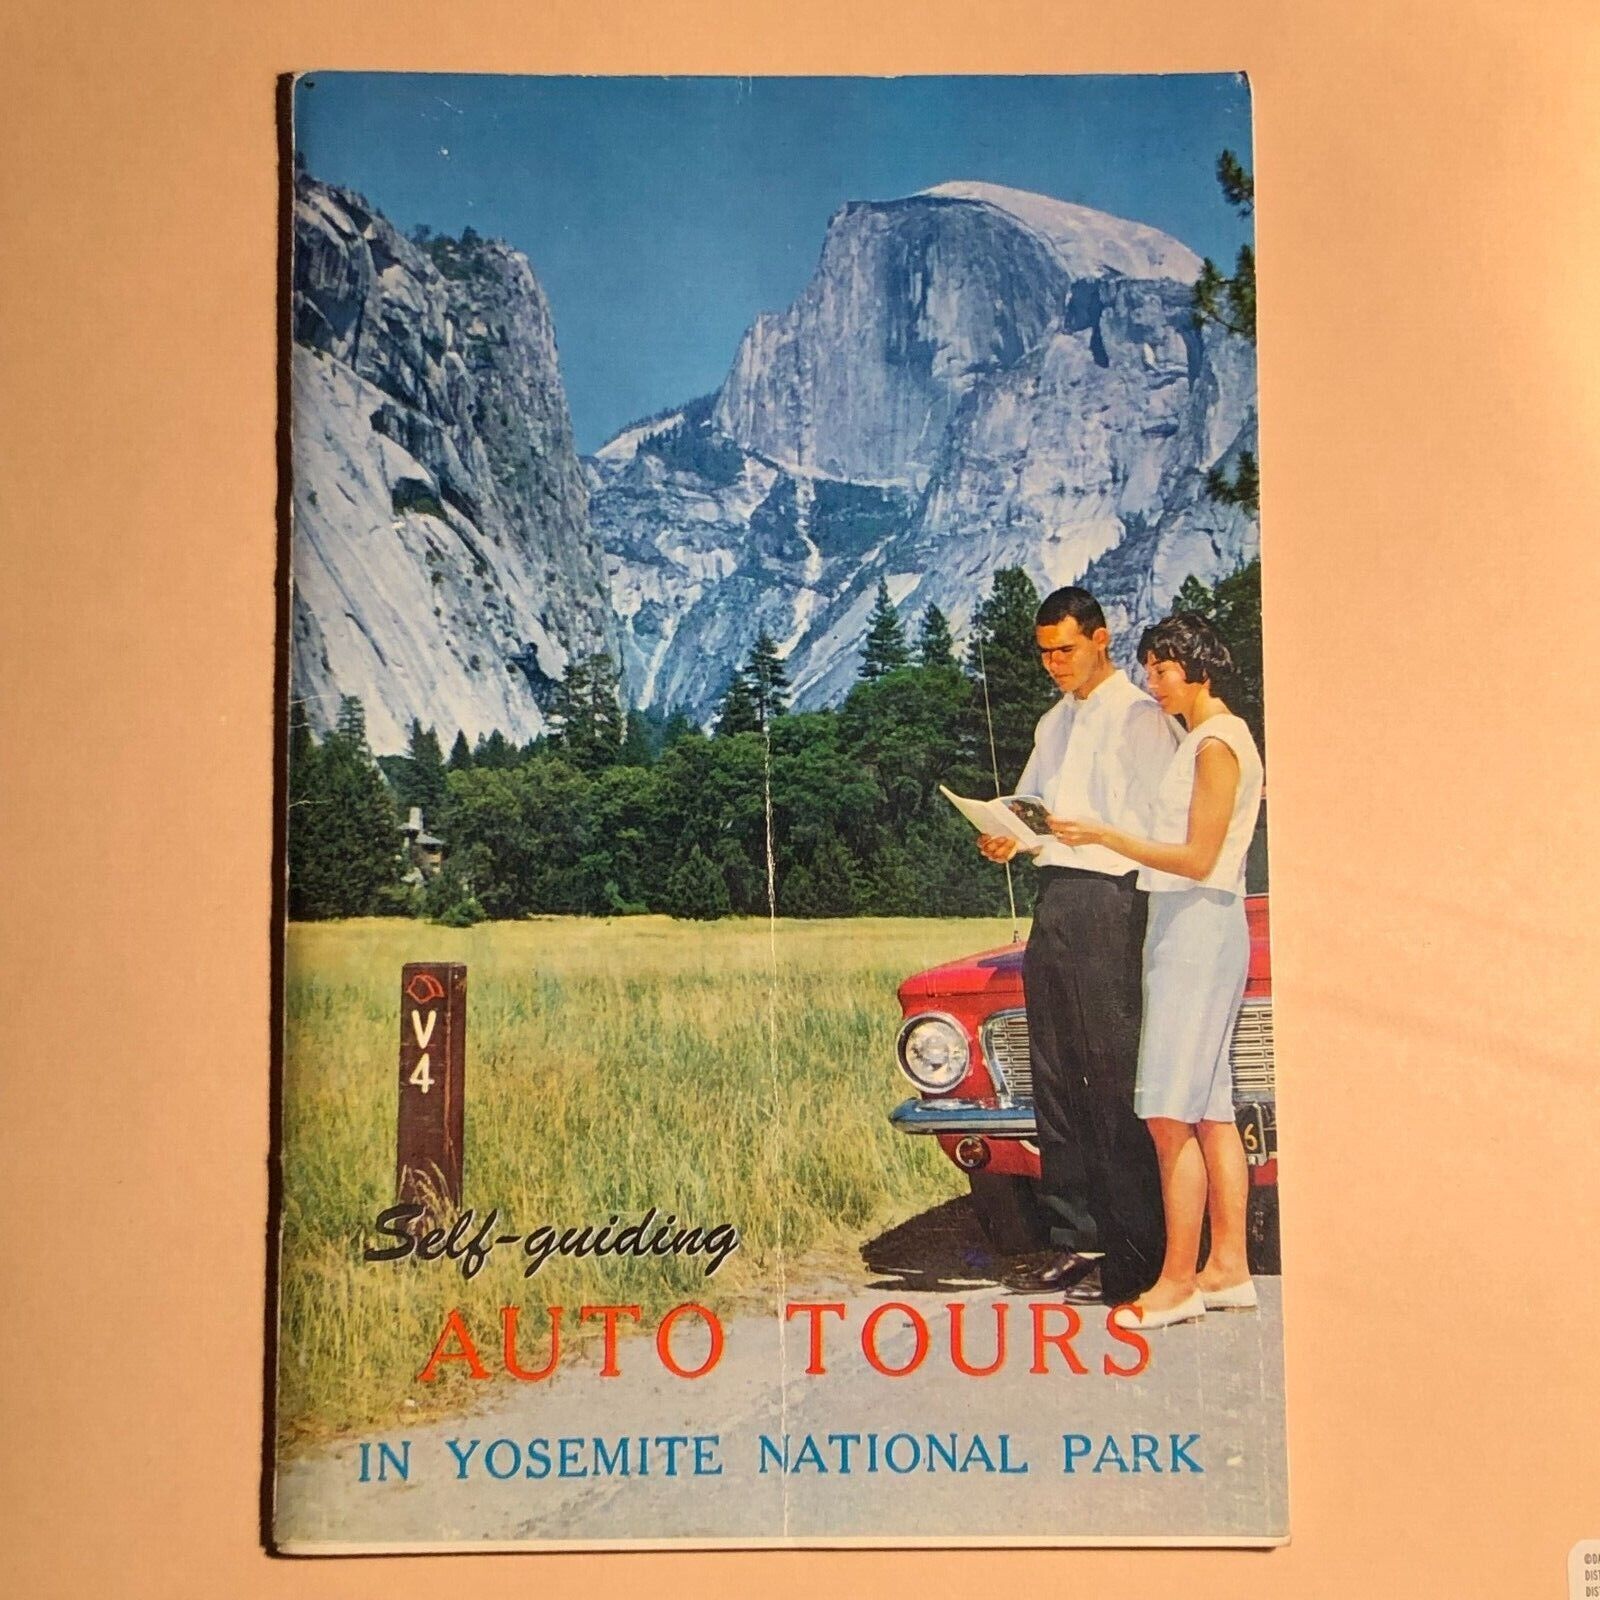 1965 YOSEMITE NATIONAL PARK SELF-GUIDING AUTO TOURS TRAVEL GUIDE